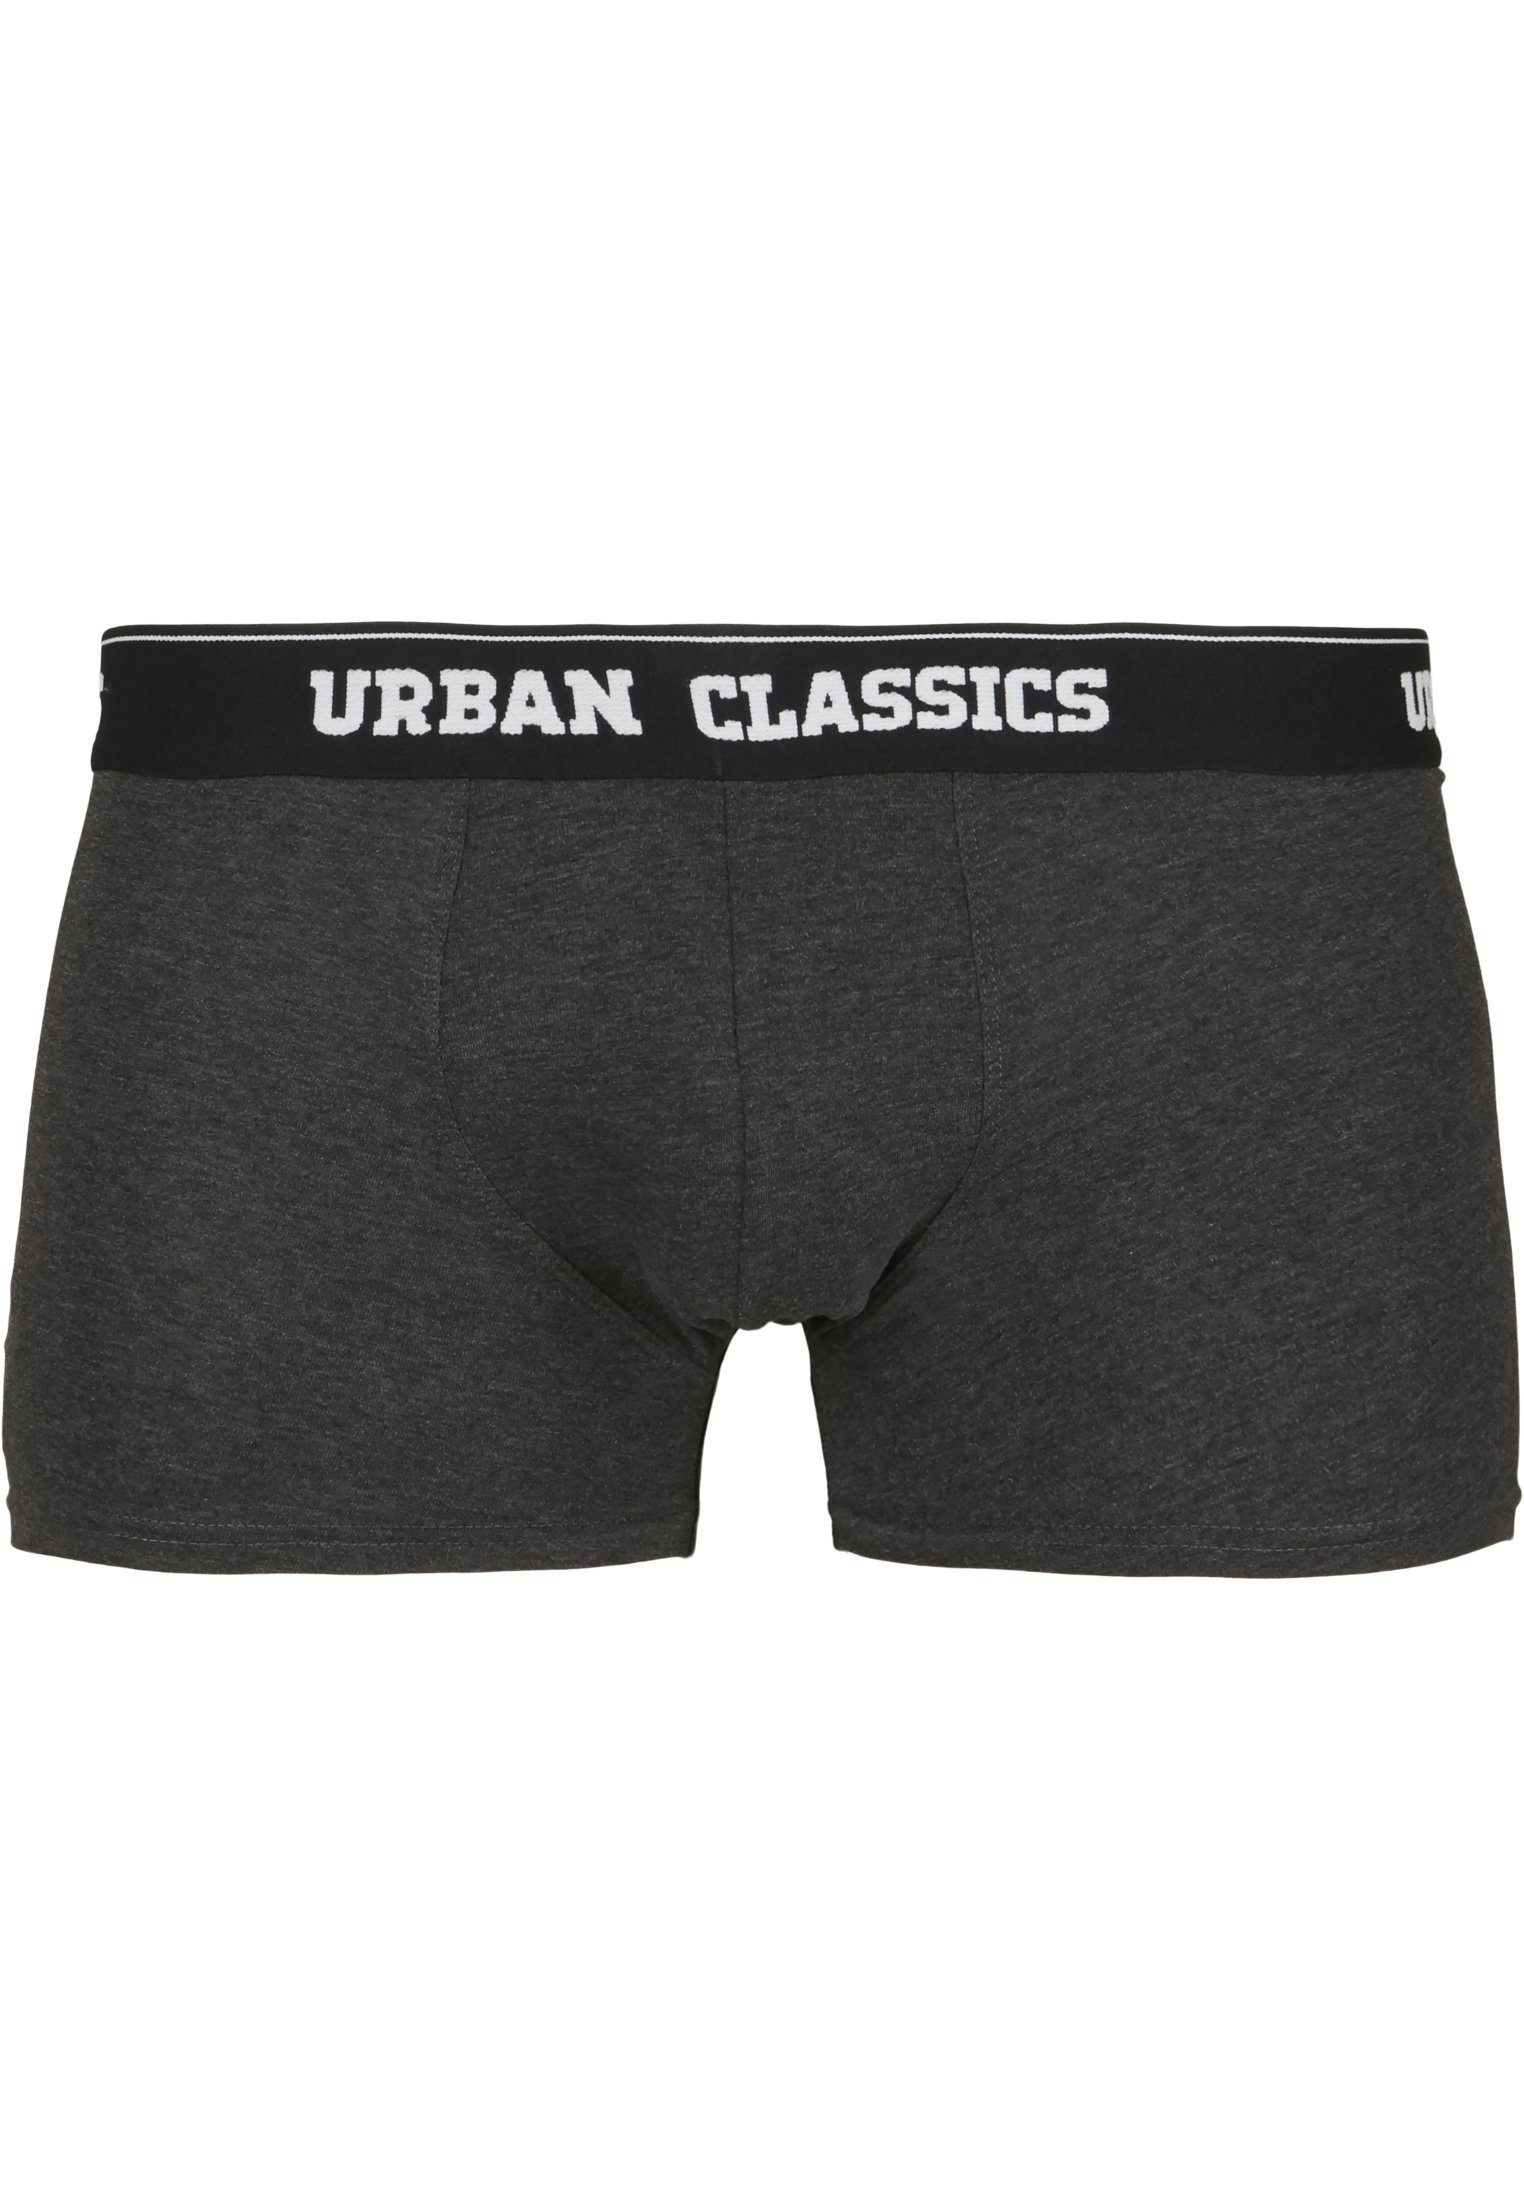 URBAN CLASSICS Boxershorts Herren Boxer 5-Pack (1-St) white/darkgreen/charcoal/black Shorts